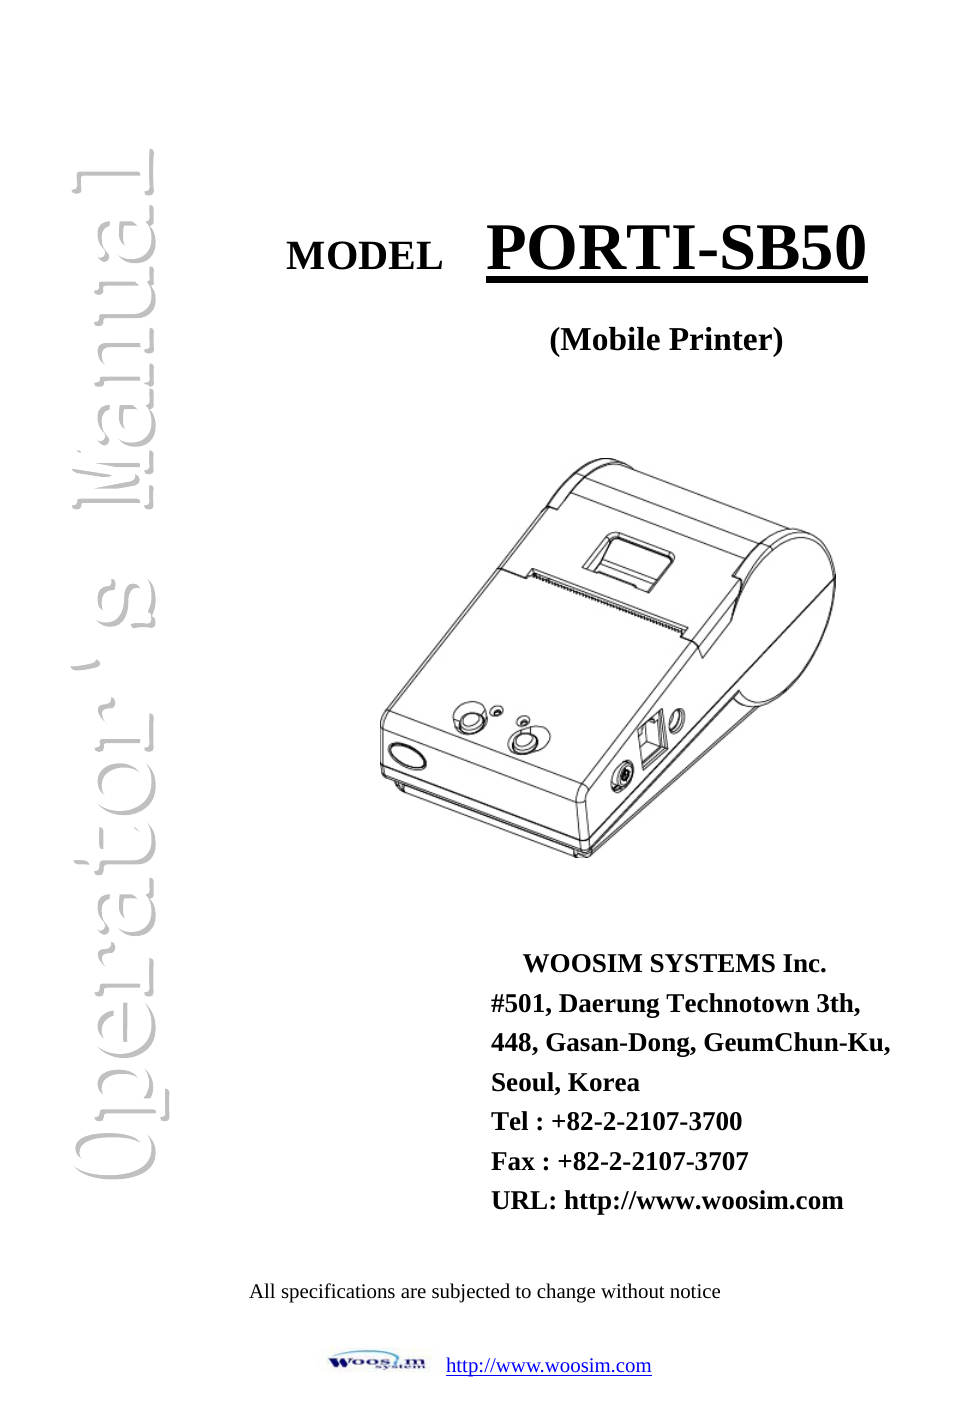 http://www.woosim.comAll specifications are subjected to change without notice MODEL PORTI-SB50(Mobile Printer)WOOSIM SYSTEMS Inc. #501, Daerung Technotown 3th, 448, Gasan-Dong, GeumChun-Ku,   Seoul, Korea Tel : +82-2-2107-3700 Fax : +82-2-2107-3707 URL: http://www.woosim.com